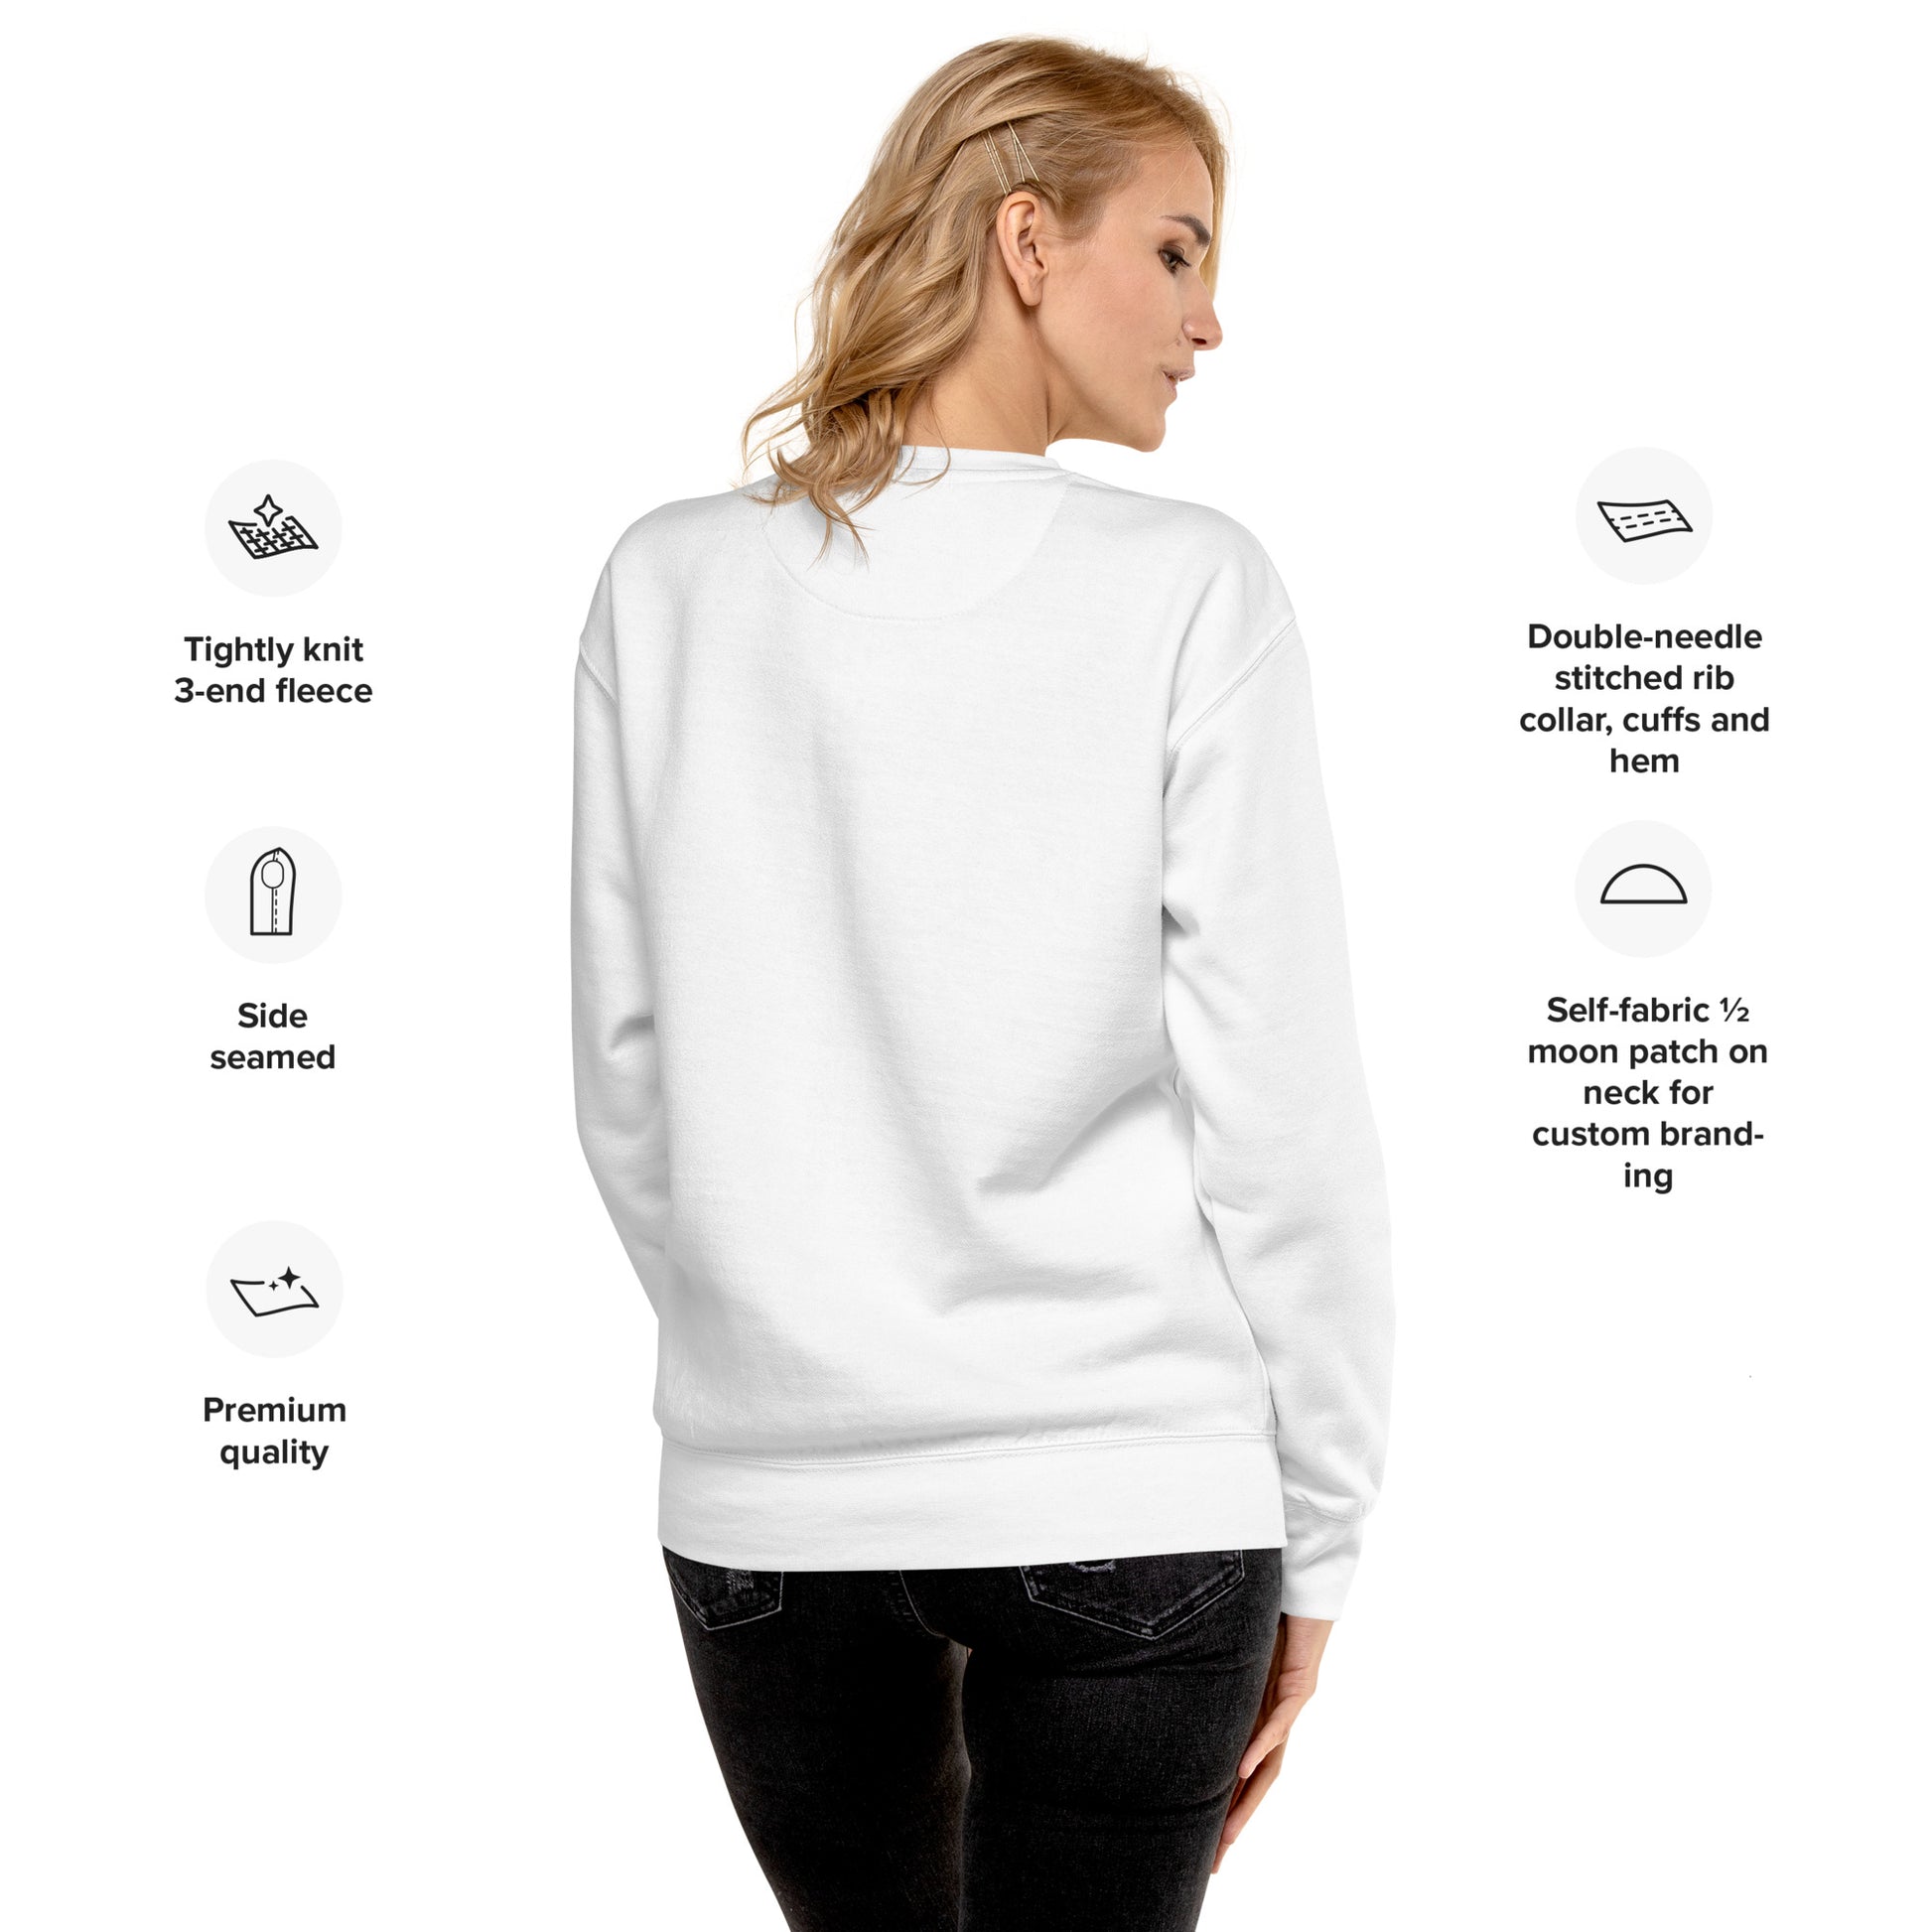 Black Women's Premium Cotton Sweatshirt by Women's Premium Cotton Sweatshirt sold by Jain Yoga